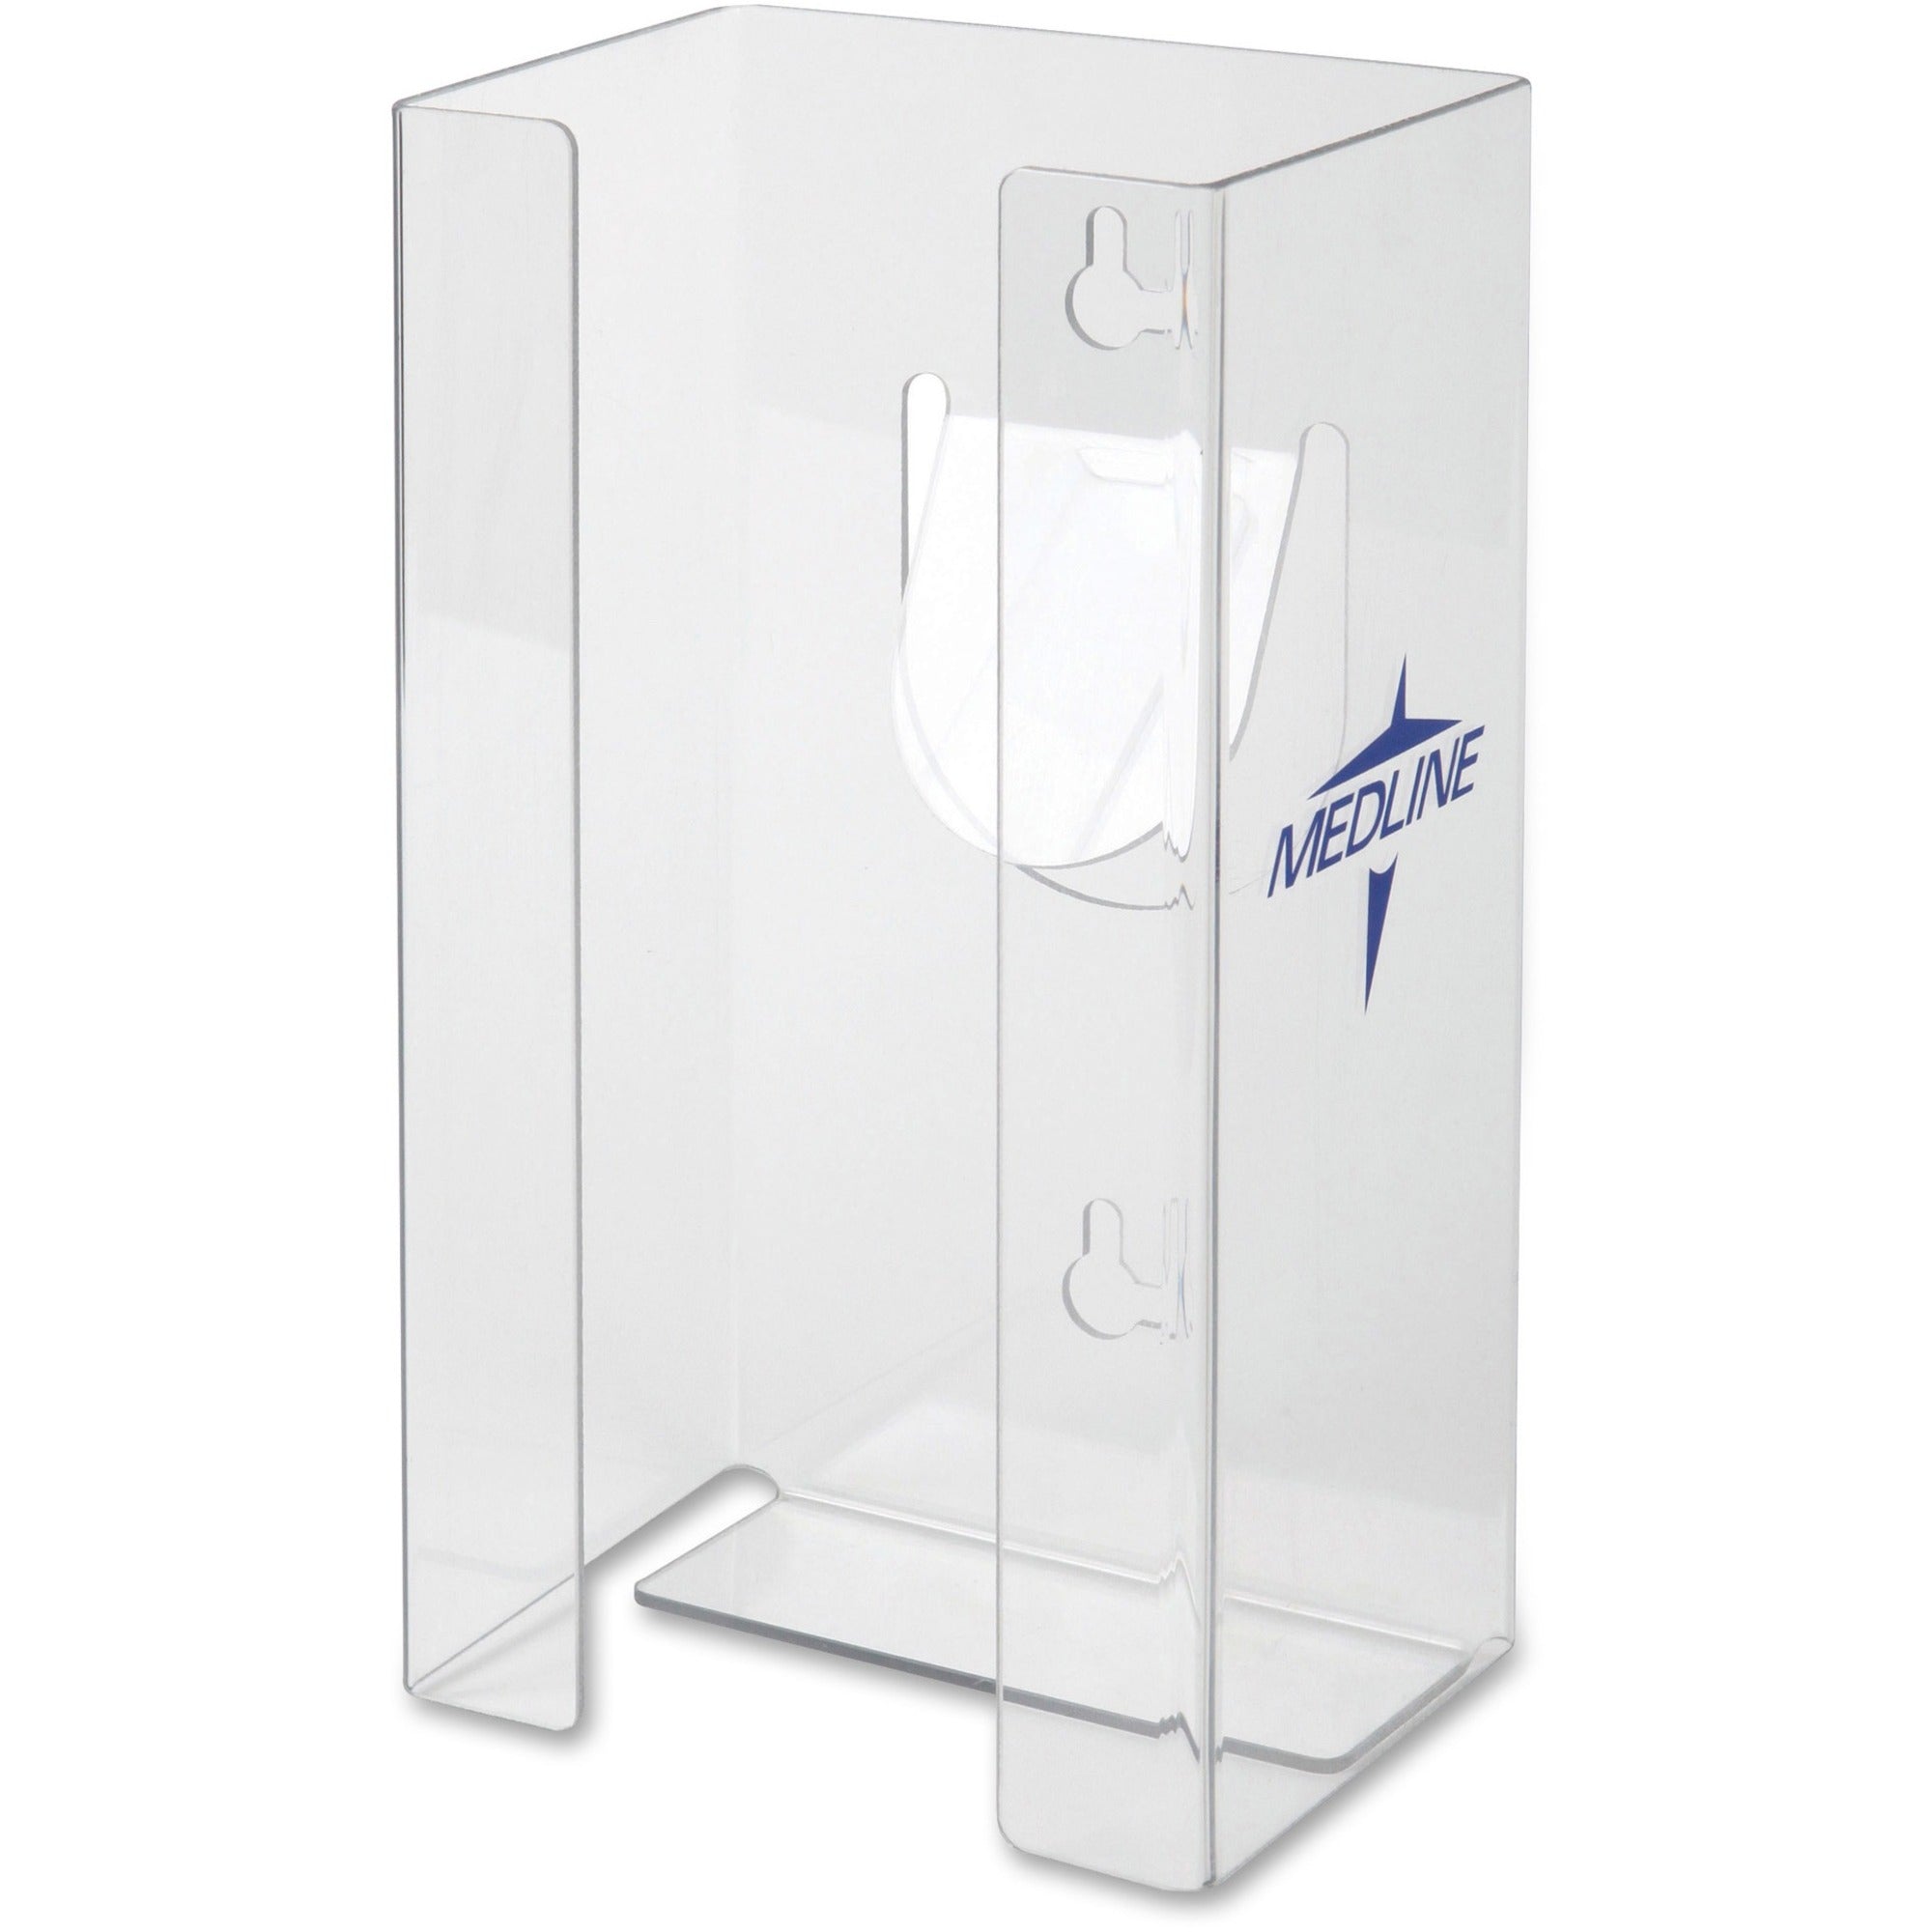 Medline Plastic Single Glove Box Holder - Horizontal, Vertical - Plexiglass - 1 Each - Clear - 